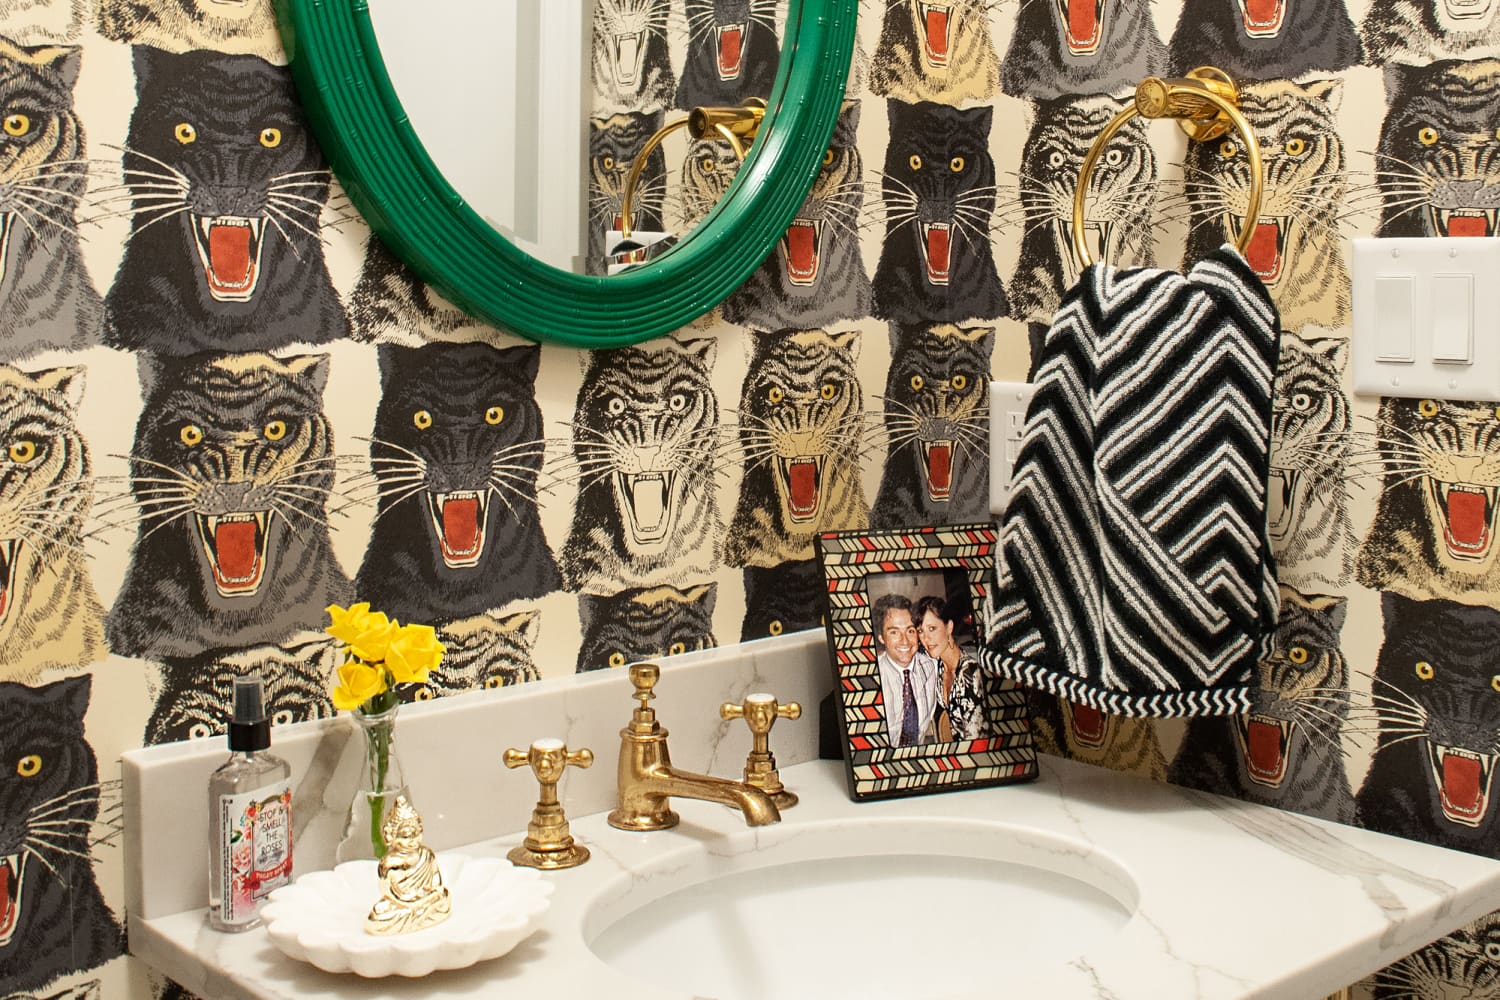 Style and Fashion  Small bathroom sinks, Easy home decor, Diy